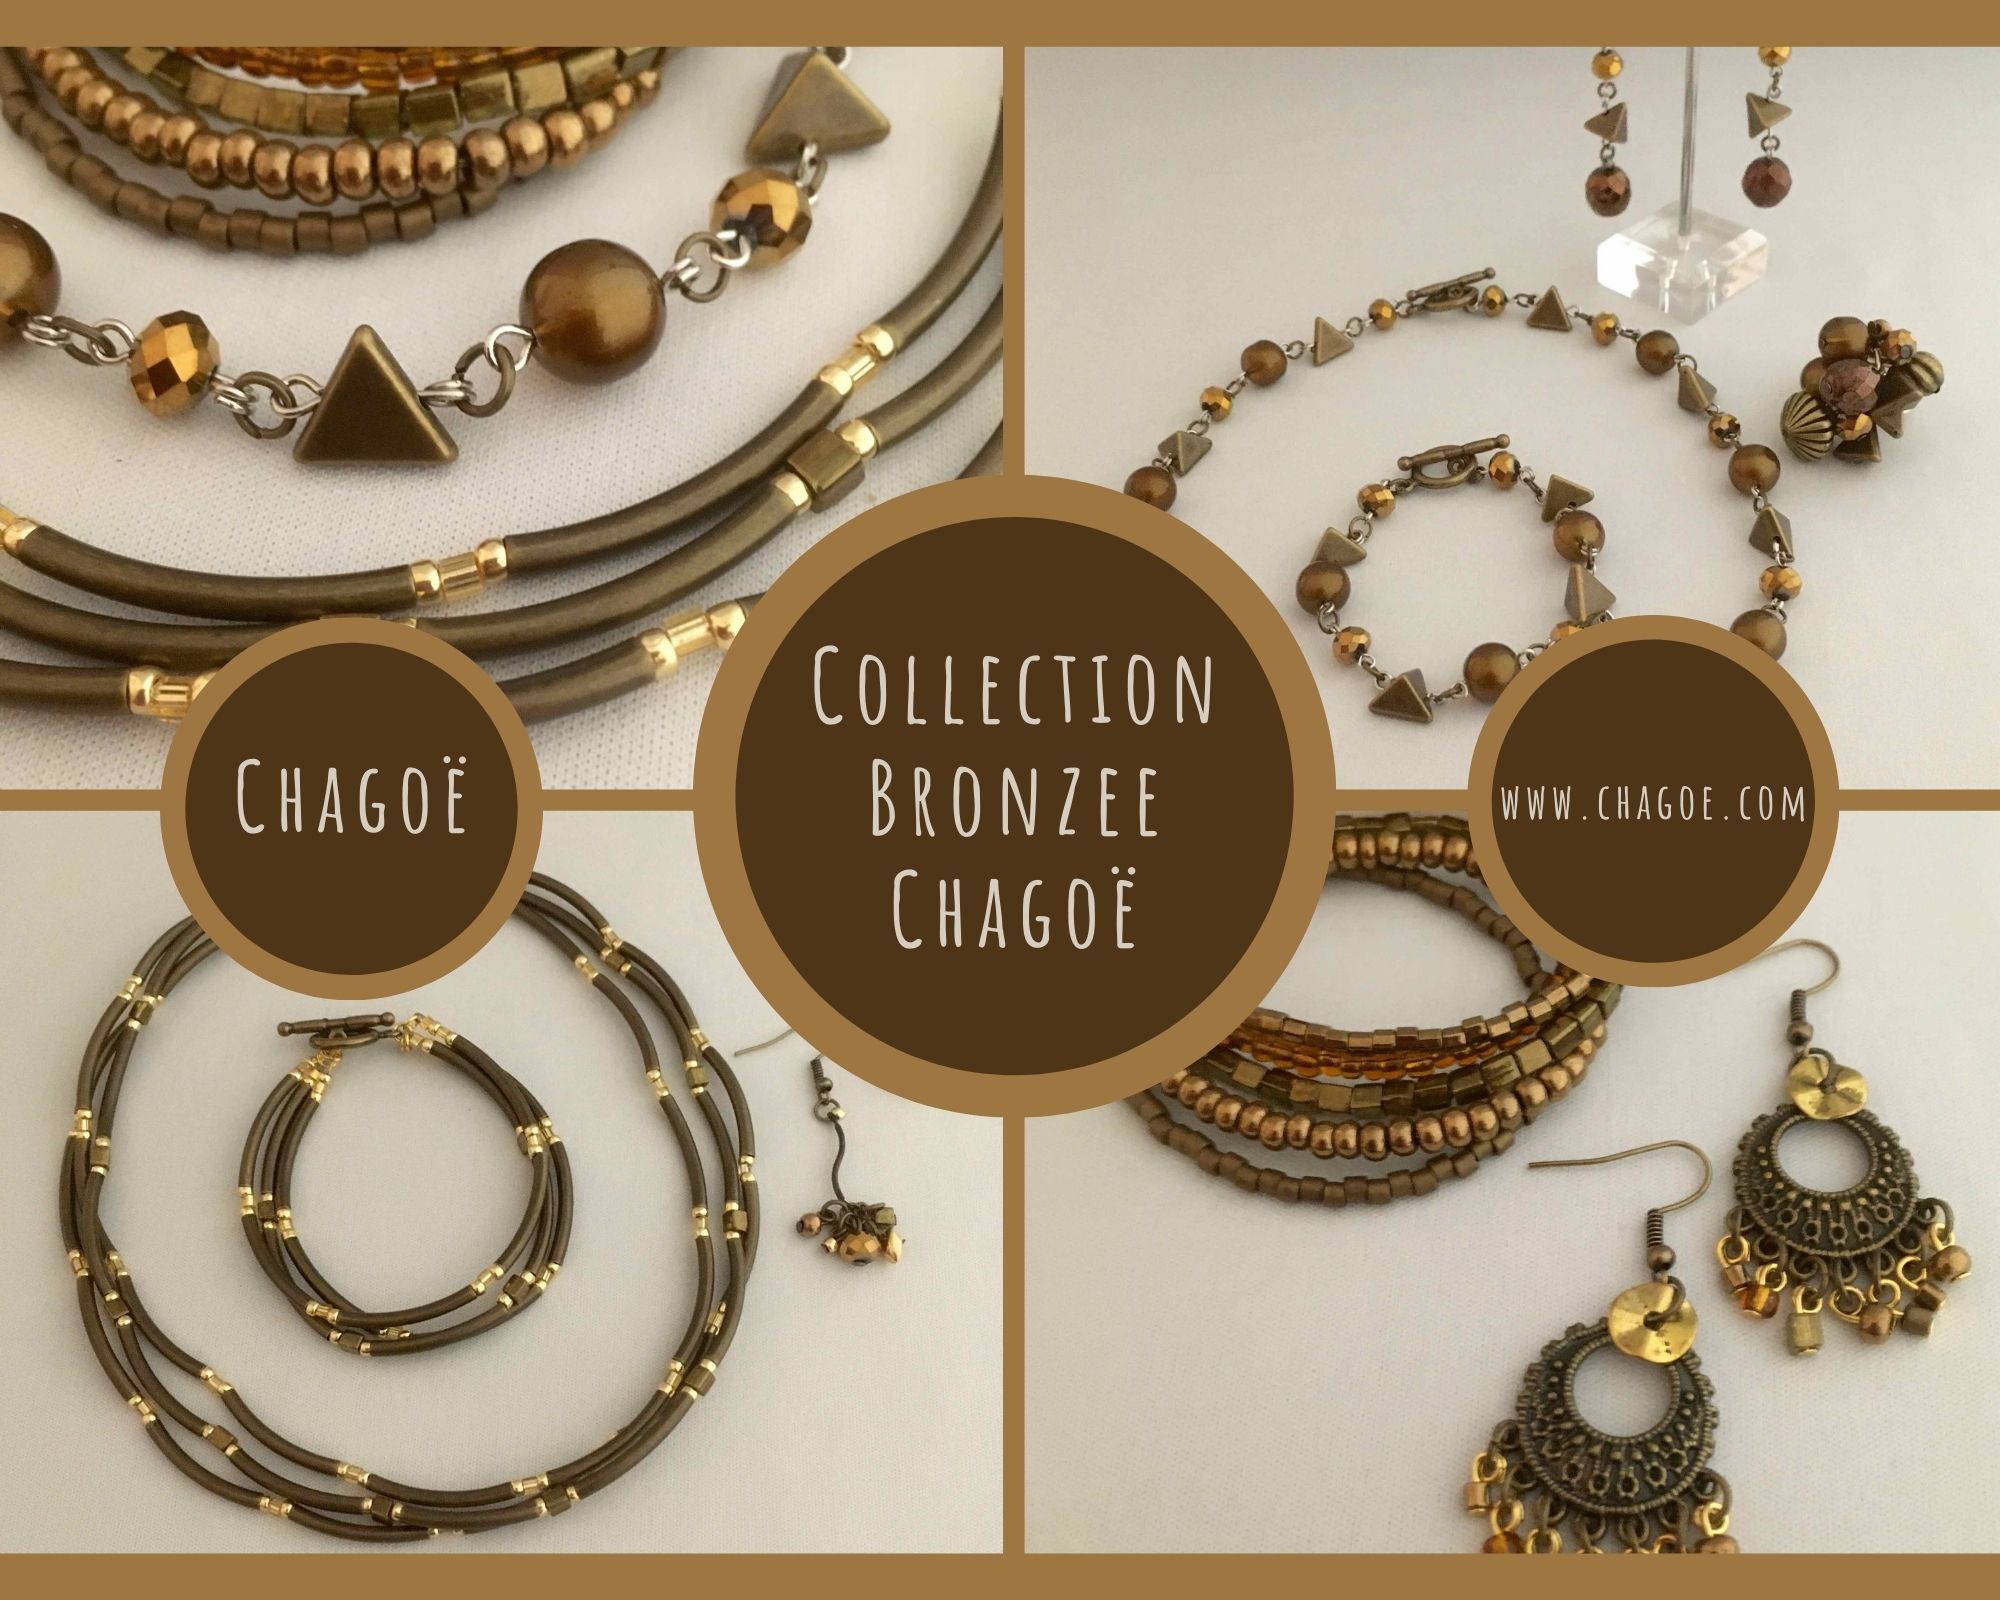 Collection BRONZEE Chagoë 2021